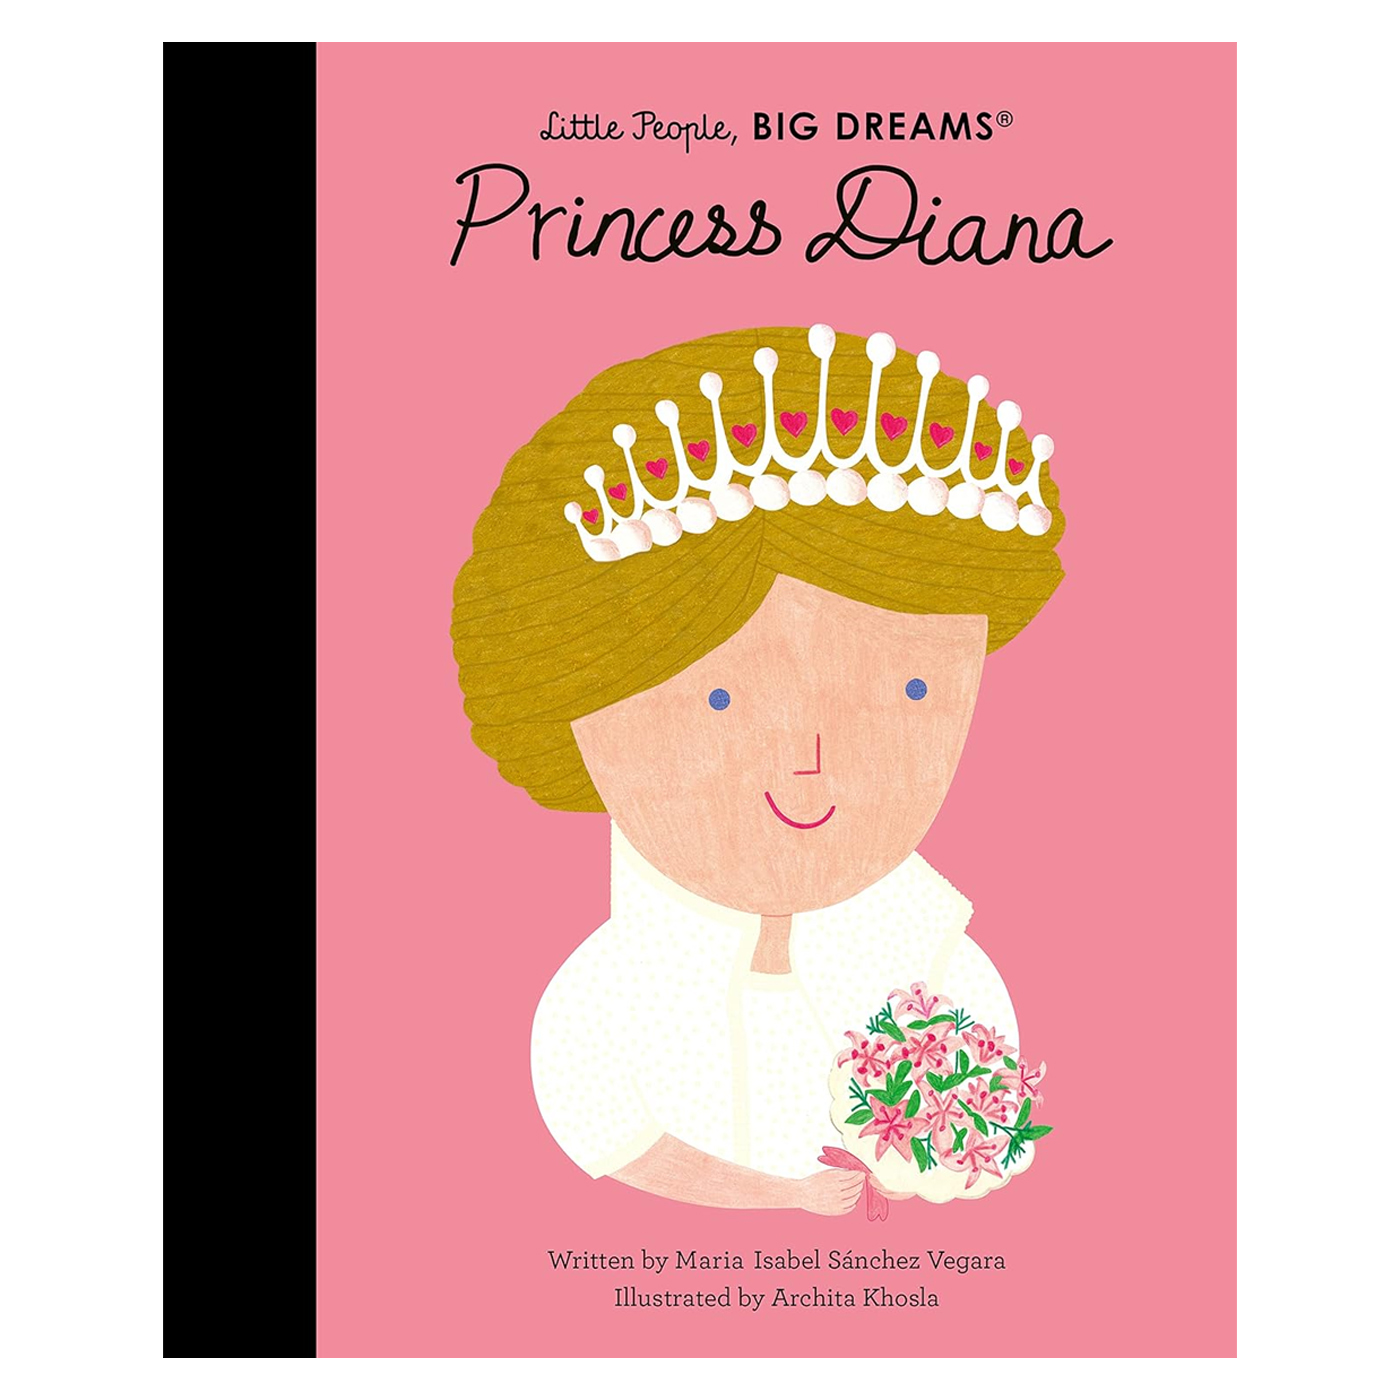 FRANCES LINCOLN Little People Big Dreams: Princess Diana